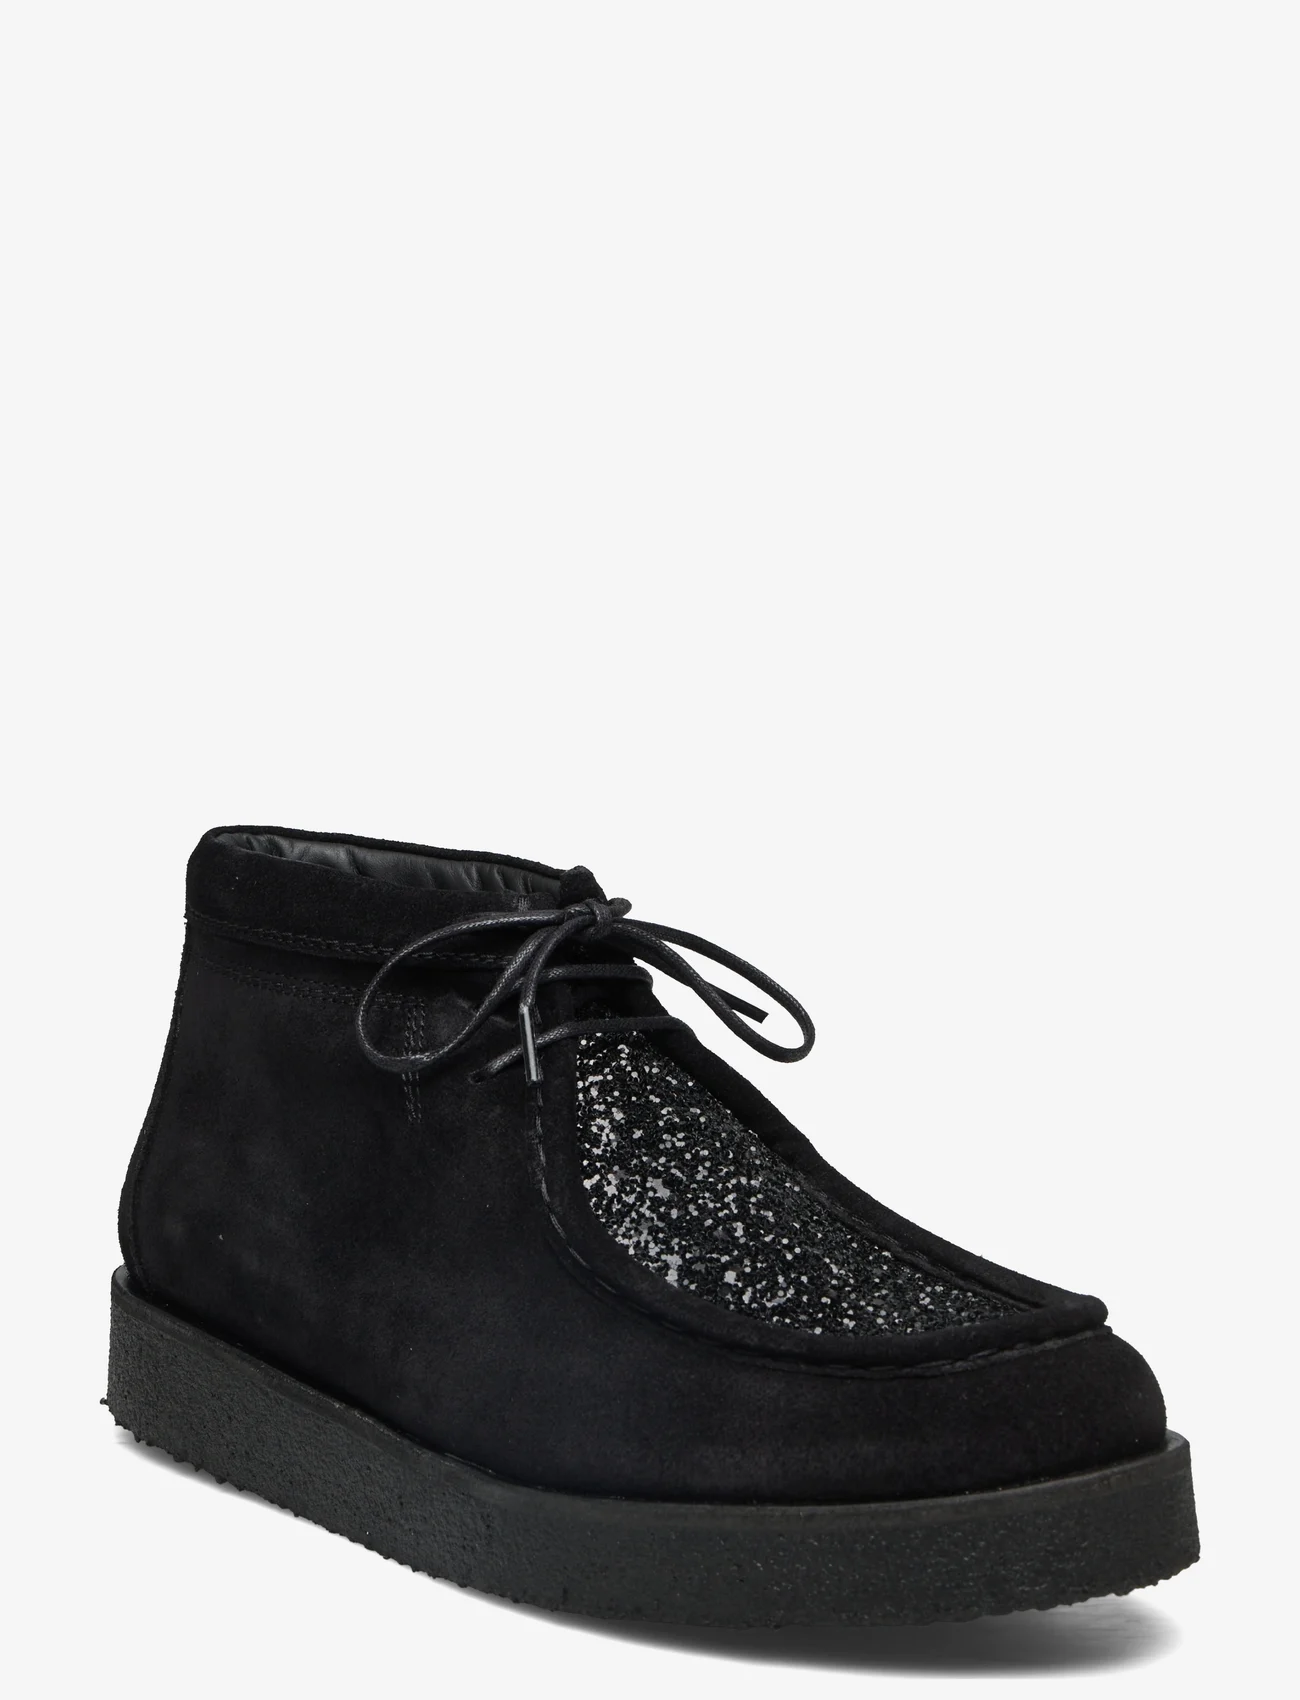 ANGULUS - Shoes - flat - with lace - lygiapadžiai bateliai - 1163/2486 black/black glitter - 0